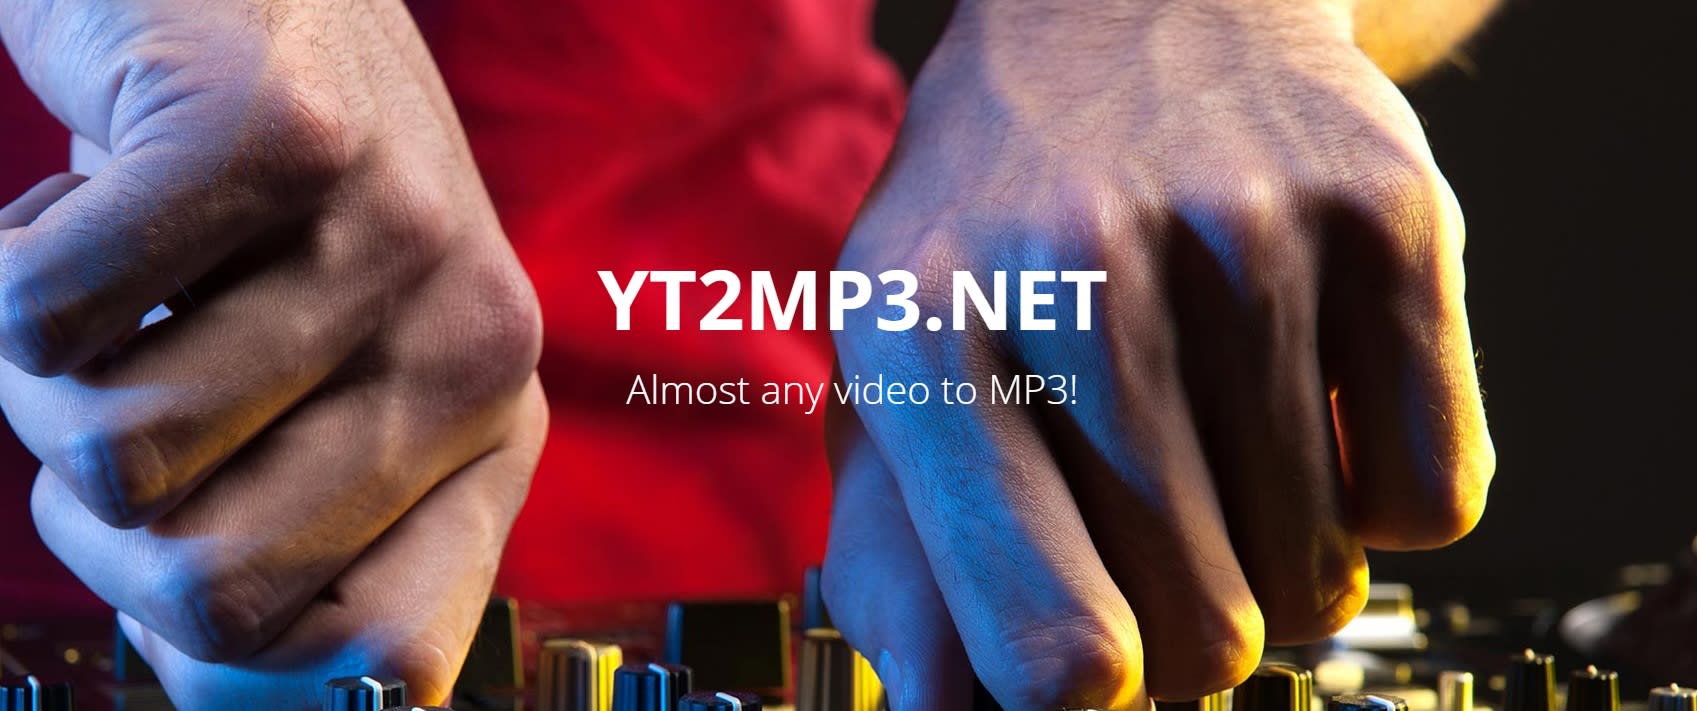 yt2mp3-net-screenshot.jpg